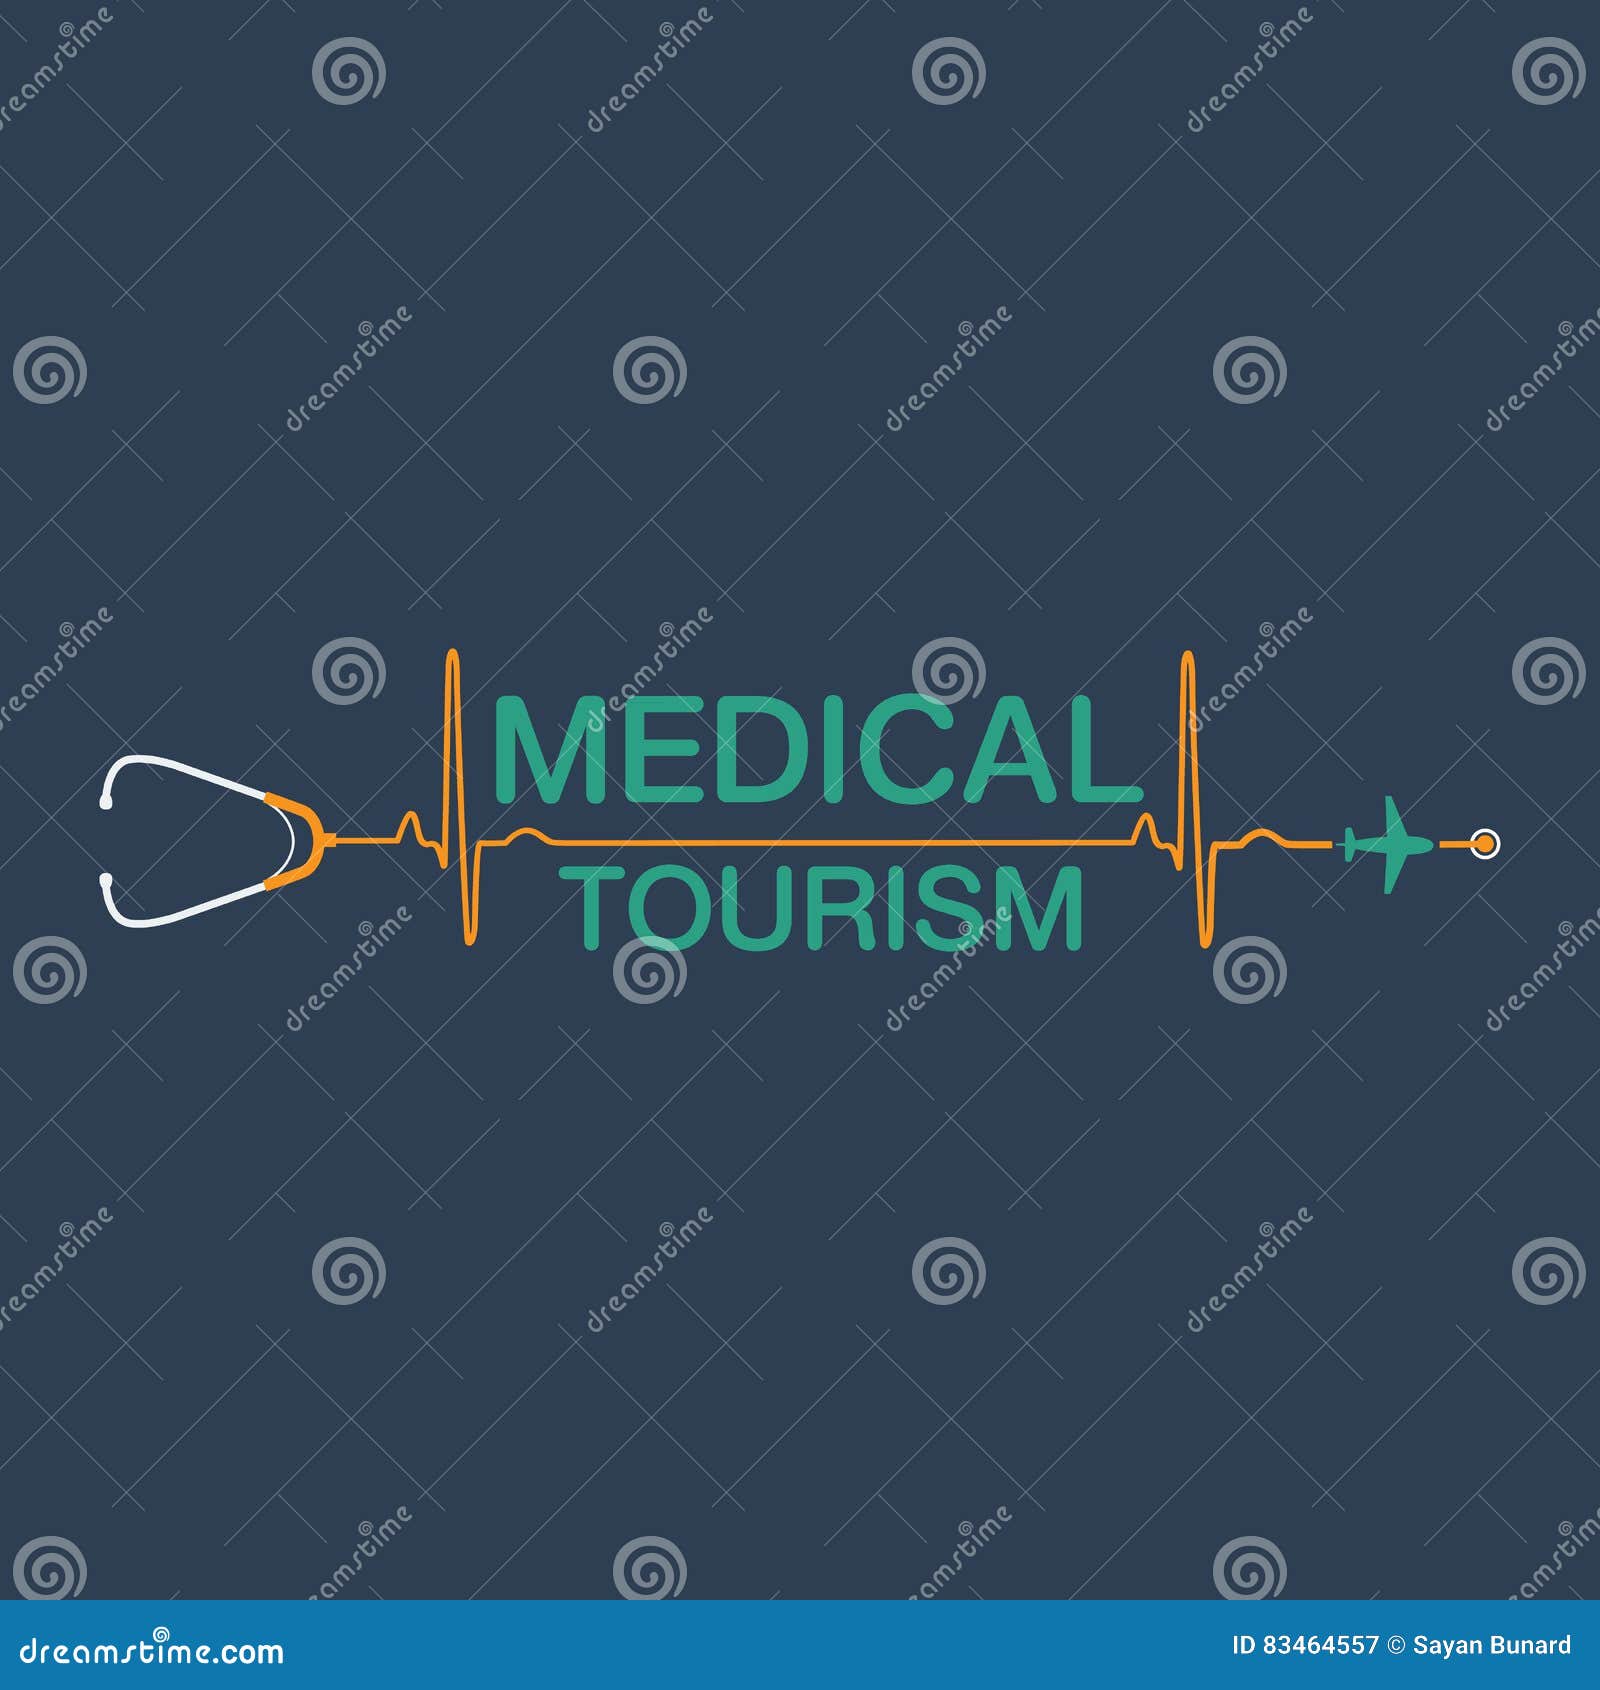 medical tourism  background